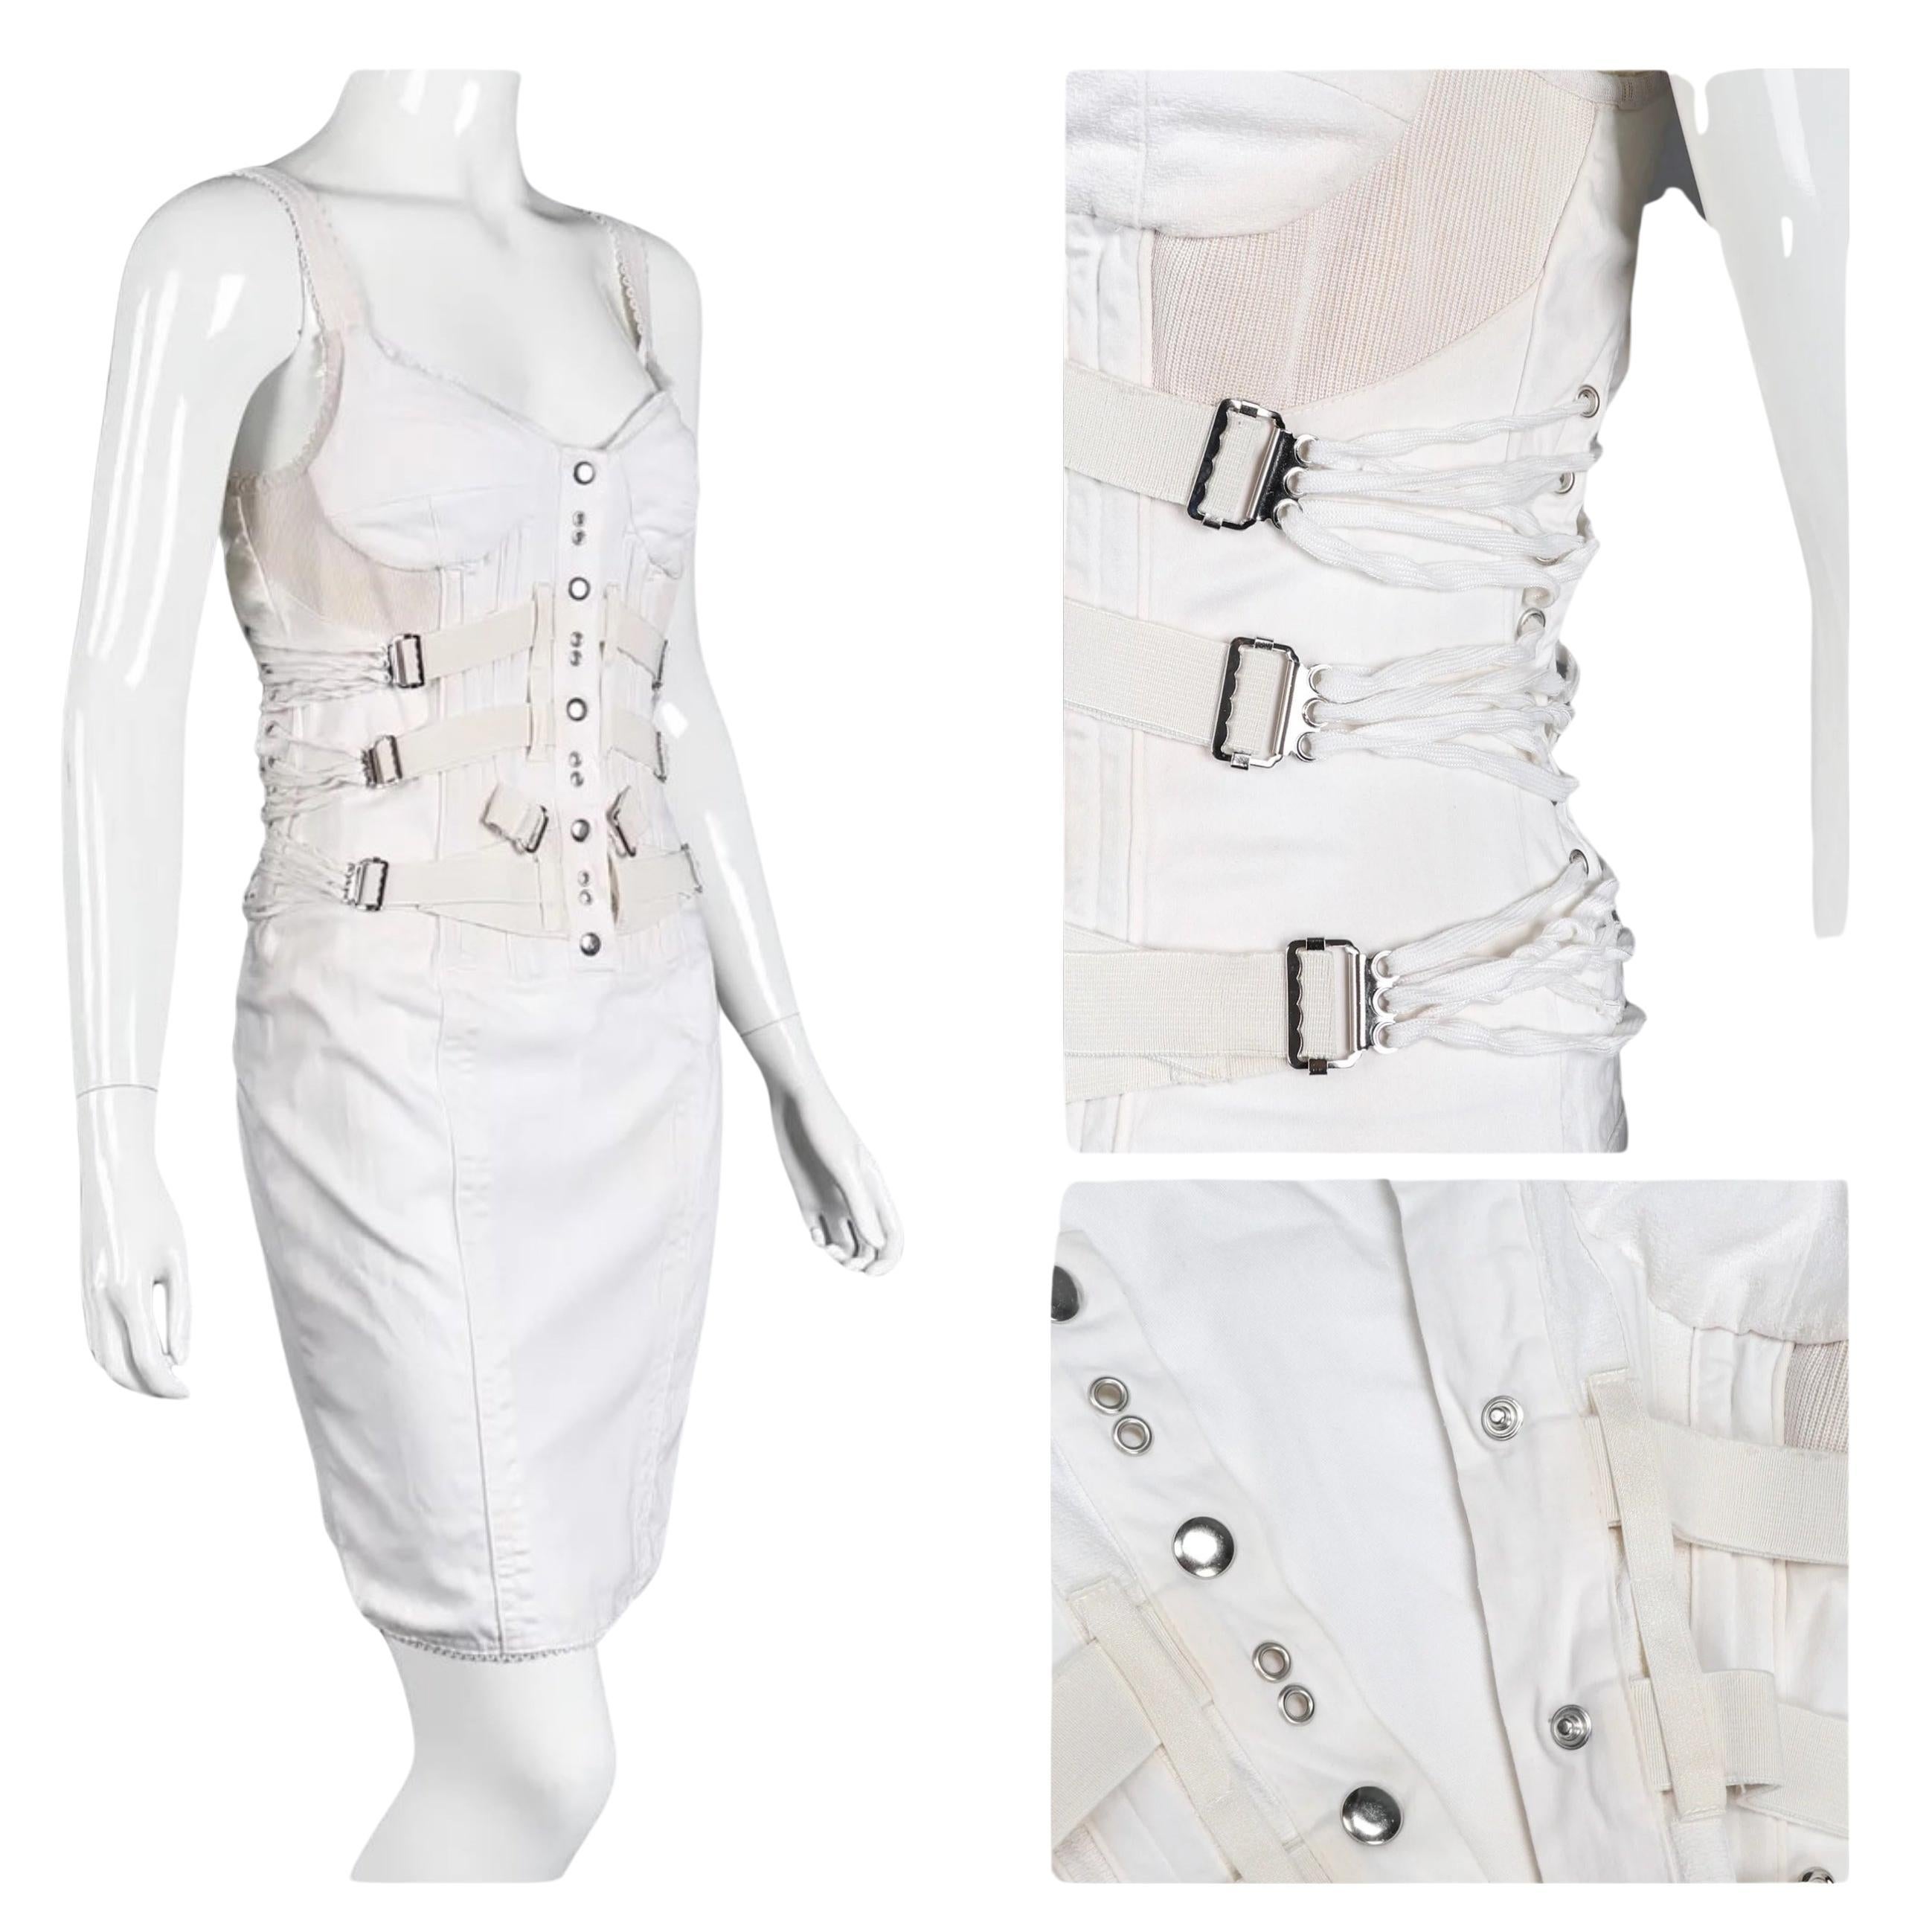 D&G Dolce and Gabbana Bondage Corset Lace Up Bustier Strap Cargo Corset Dress For Sale